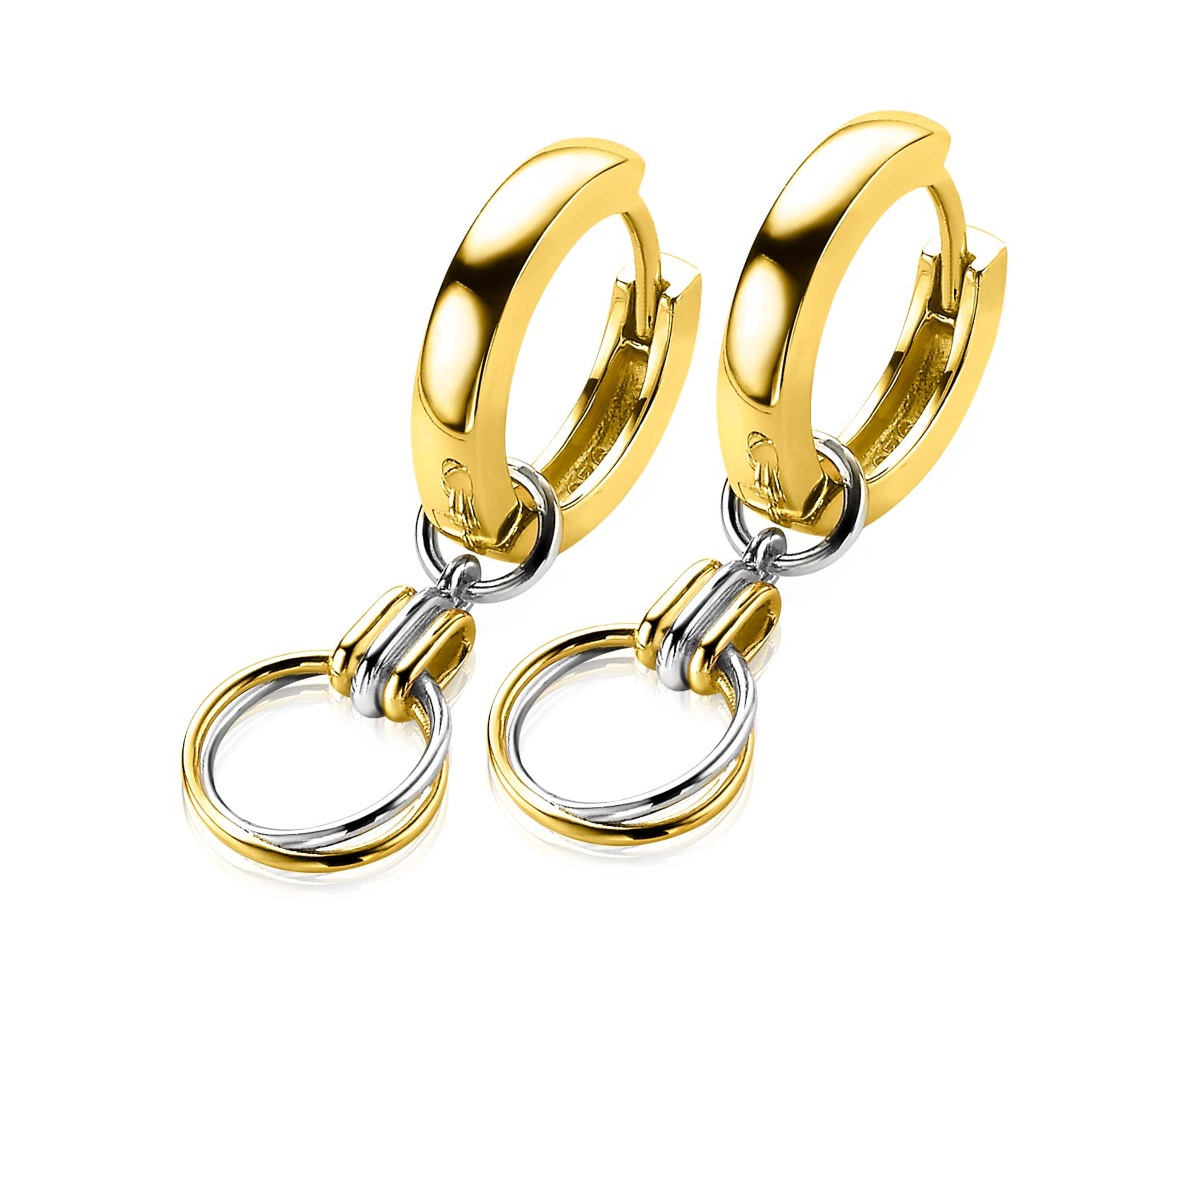 10mm ZINZI Sterling Silver Earrings Pendants Bicolor Open Circle ZICH2059 (excl. hoop earrings)